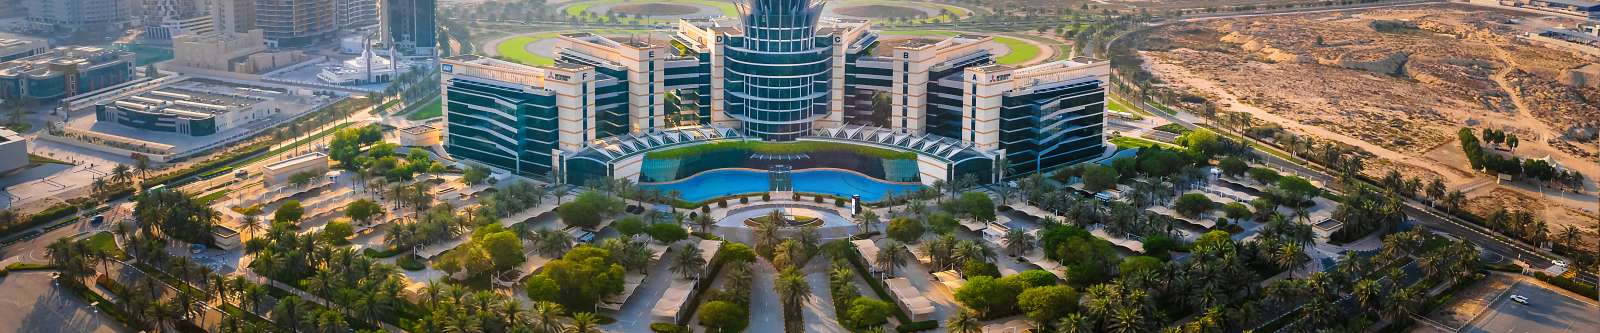 Dubai Silicone Oasis Polystorm Case Study